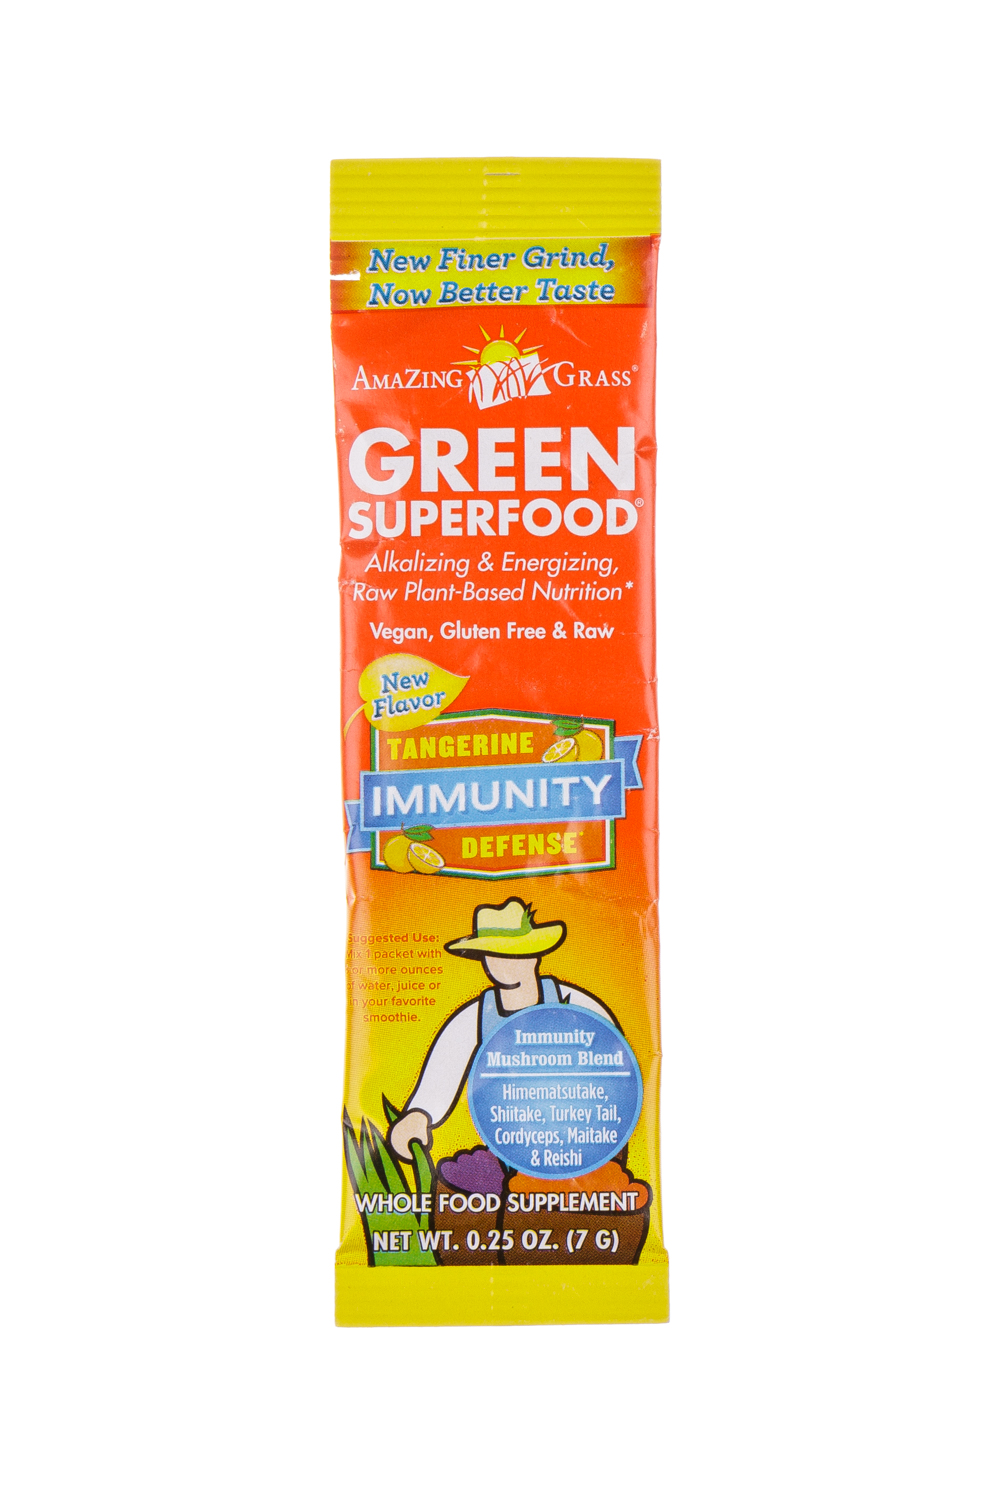 Green Superfood- Tangerine Immunity Defense